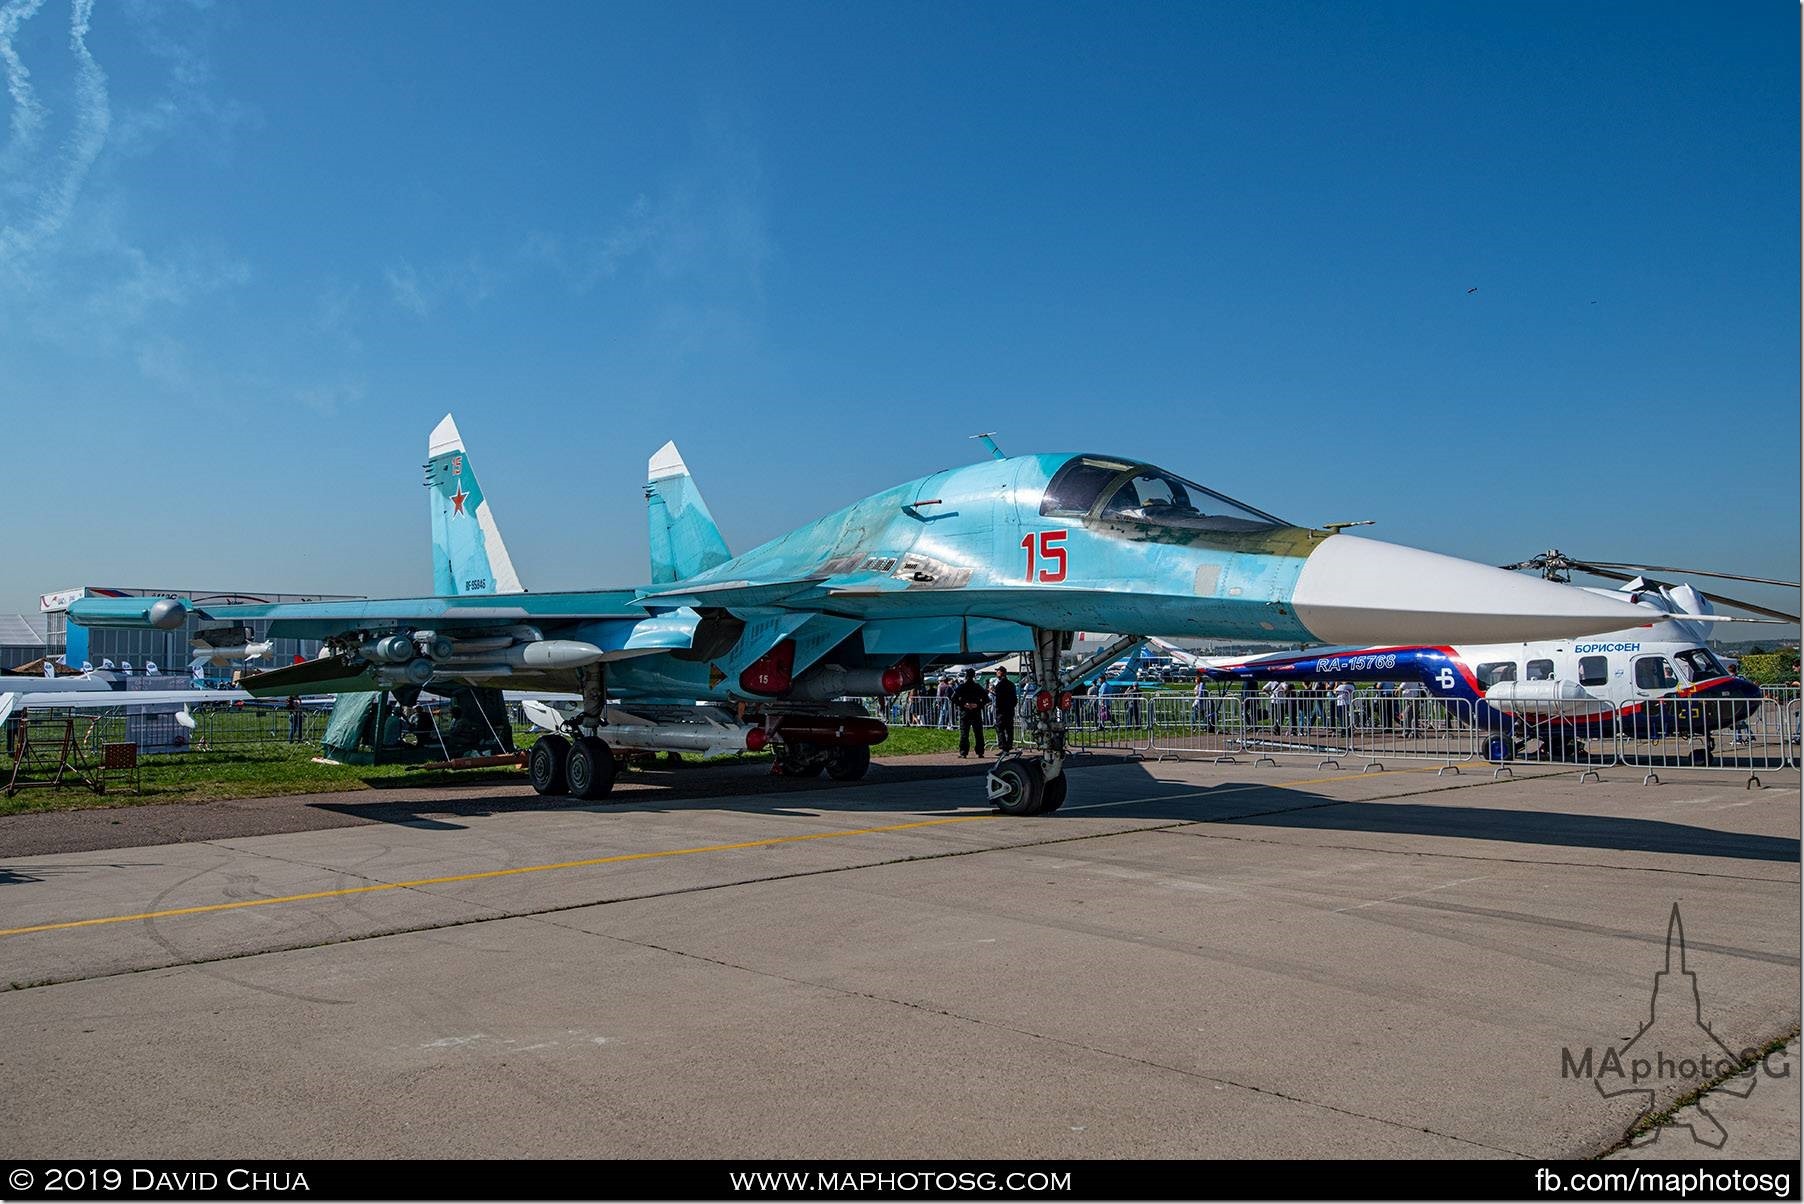 Sukhoi Su-34 all-weather supersonic medium-range fighter-bomber/strike aircraft